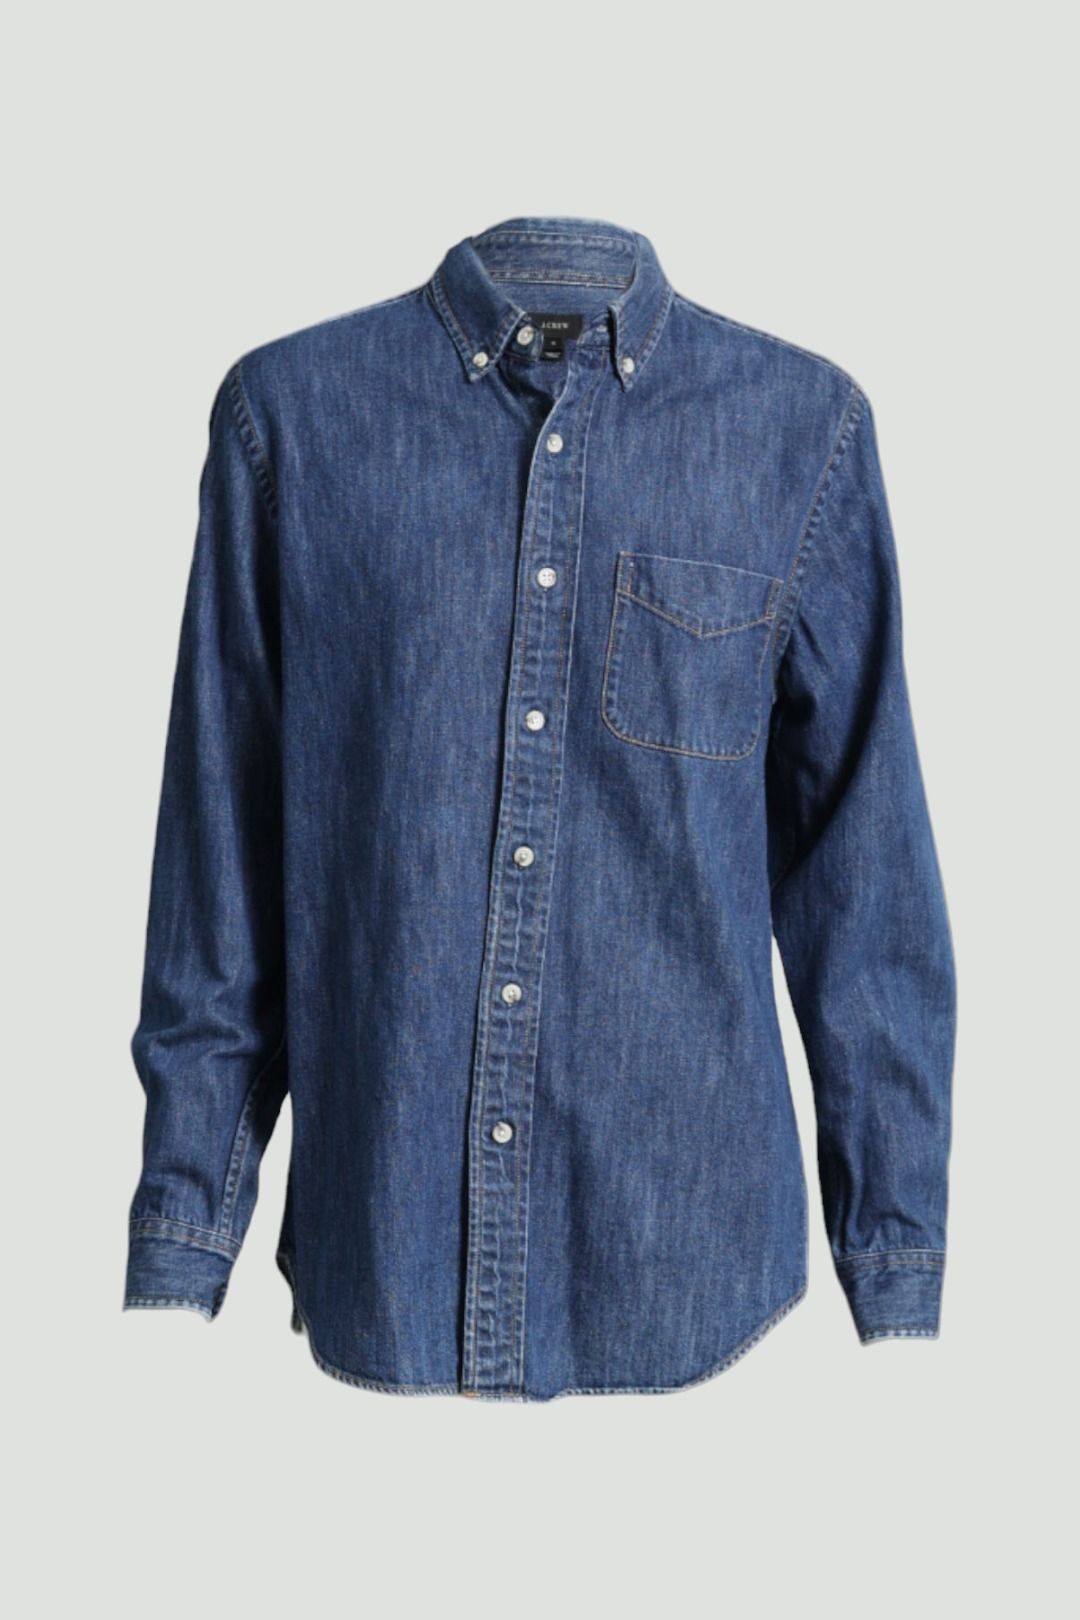 J.Crew - Long Sleeve Denim Shirt in Blue Mid Wash